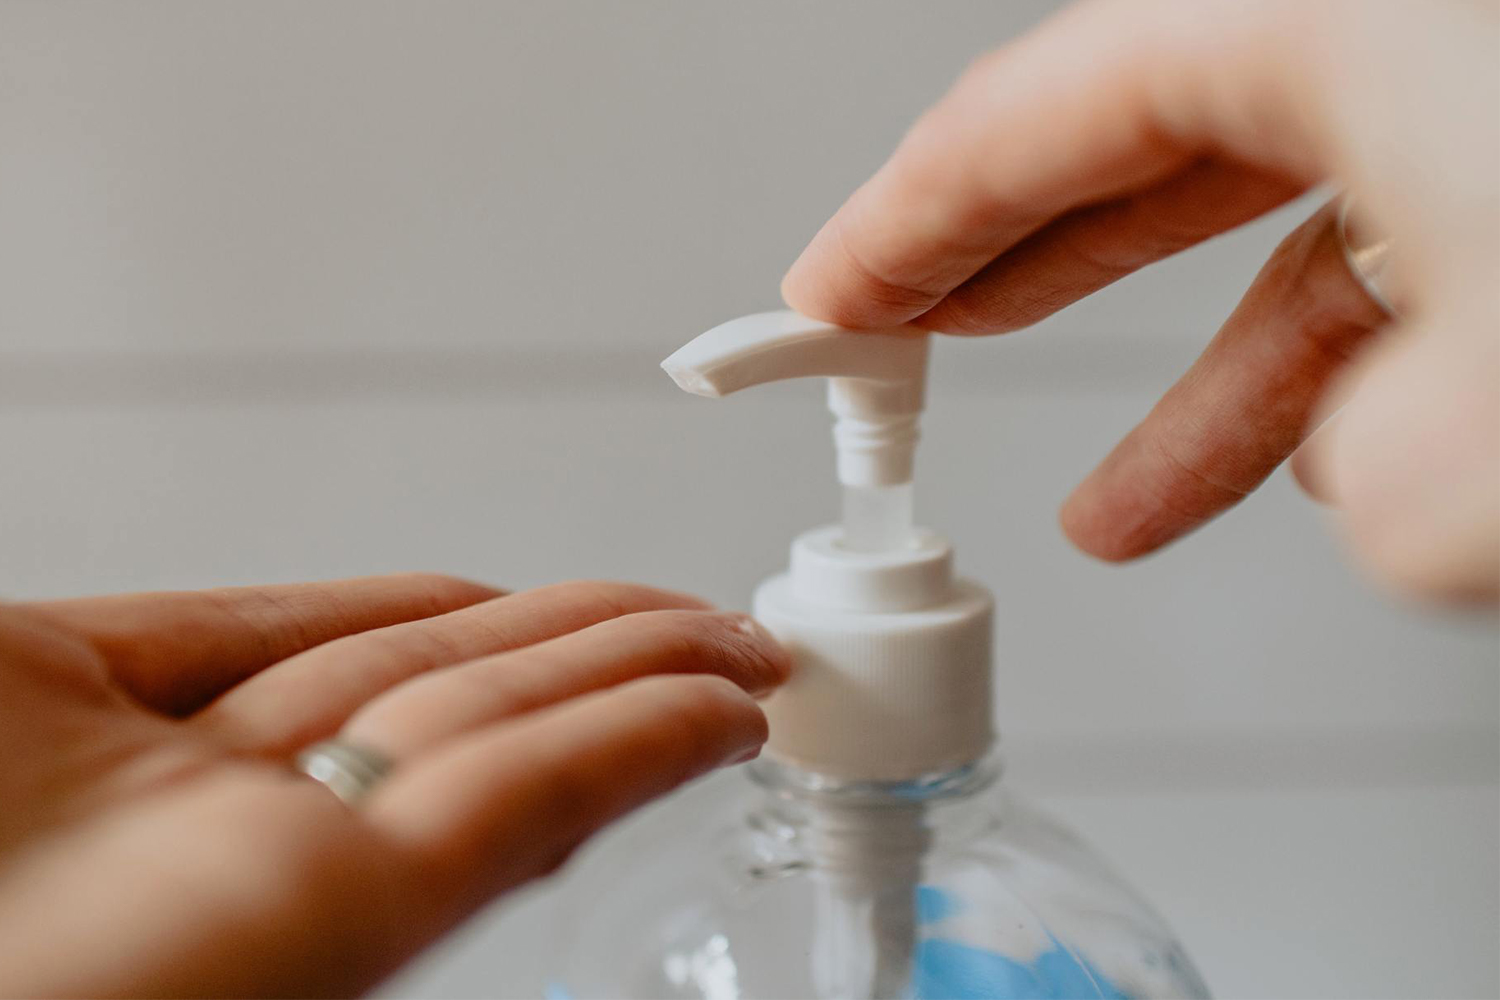 A bottle of hand sanitizer